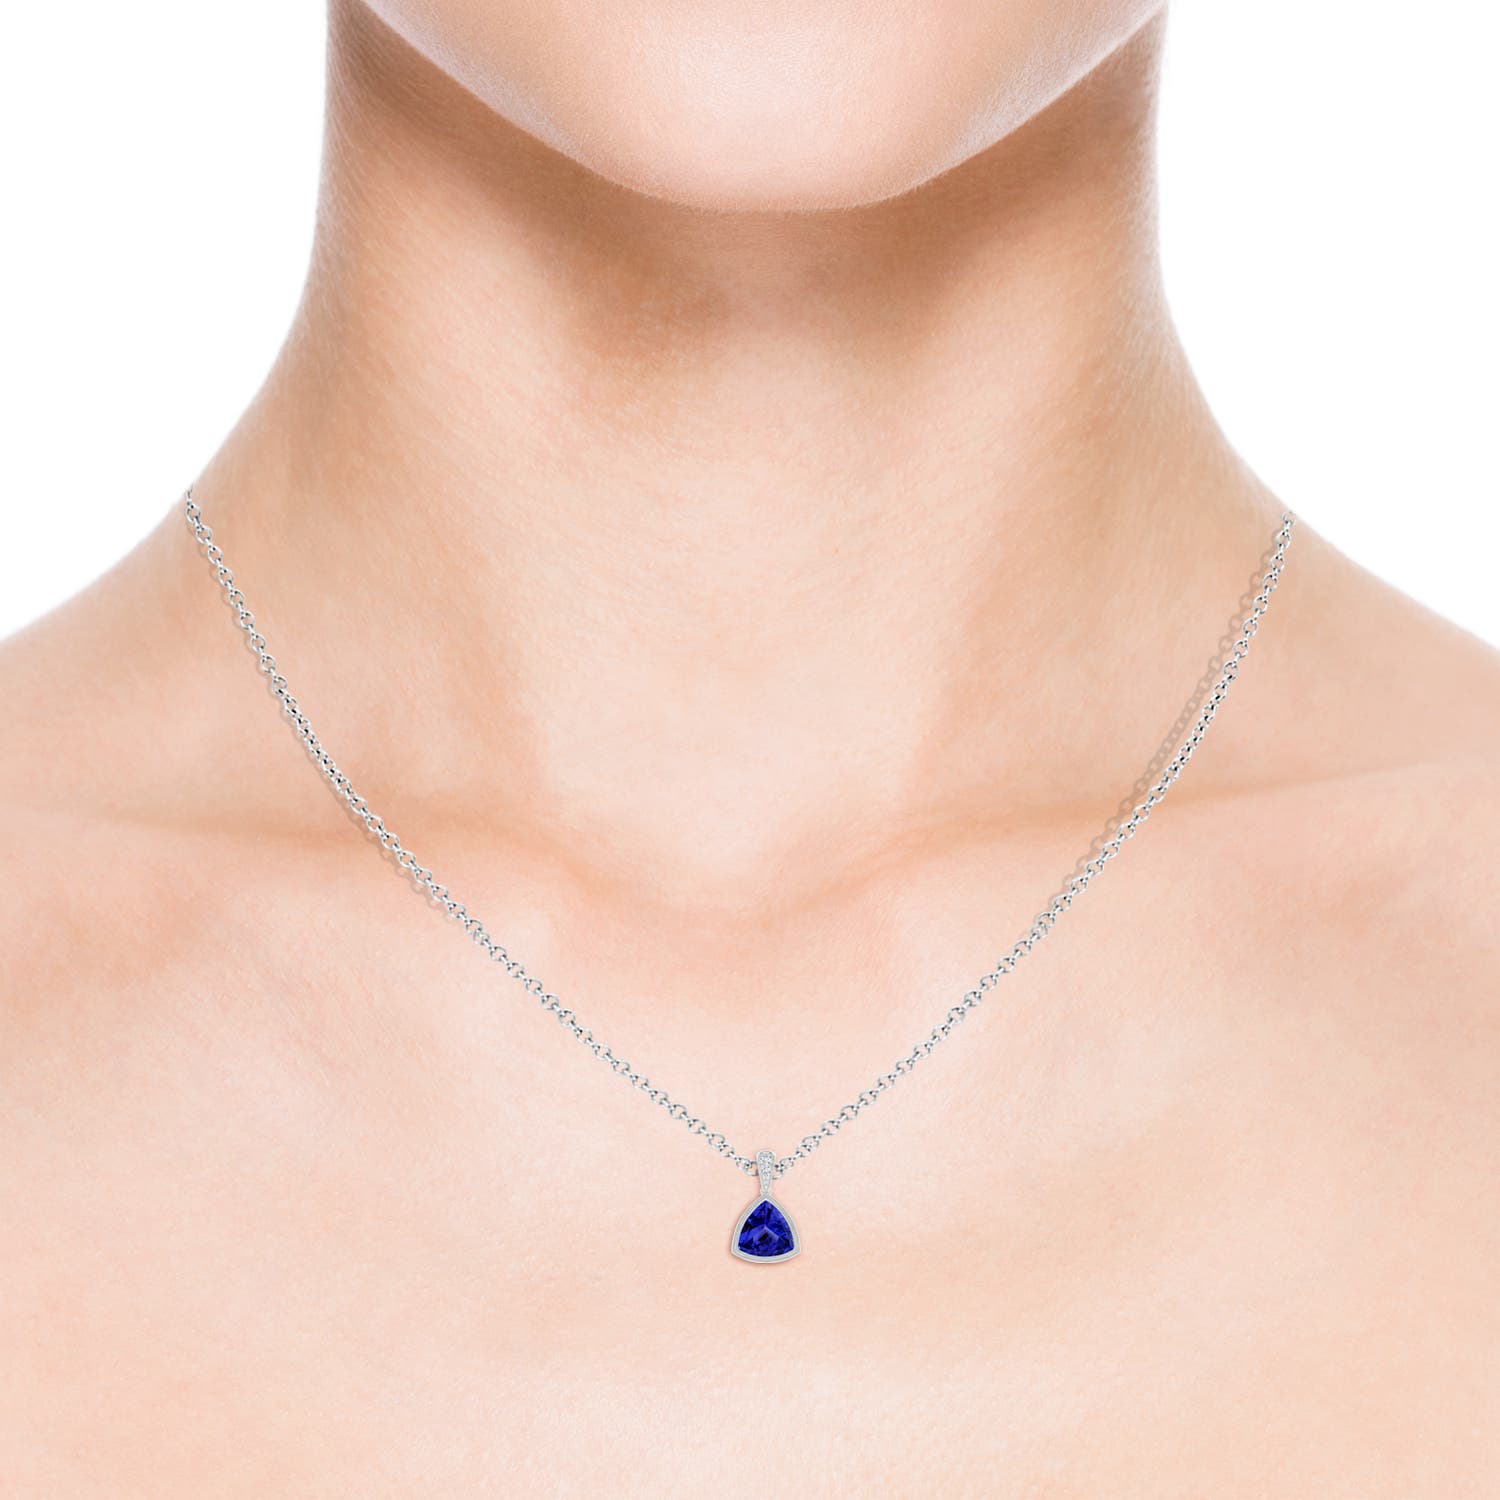 Shop Silver Tanzanite Pendant Necklaces for Women | Angara